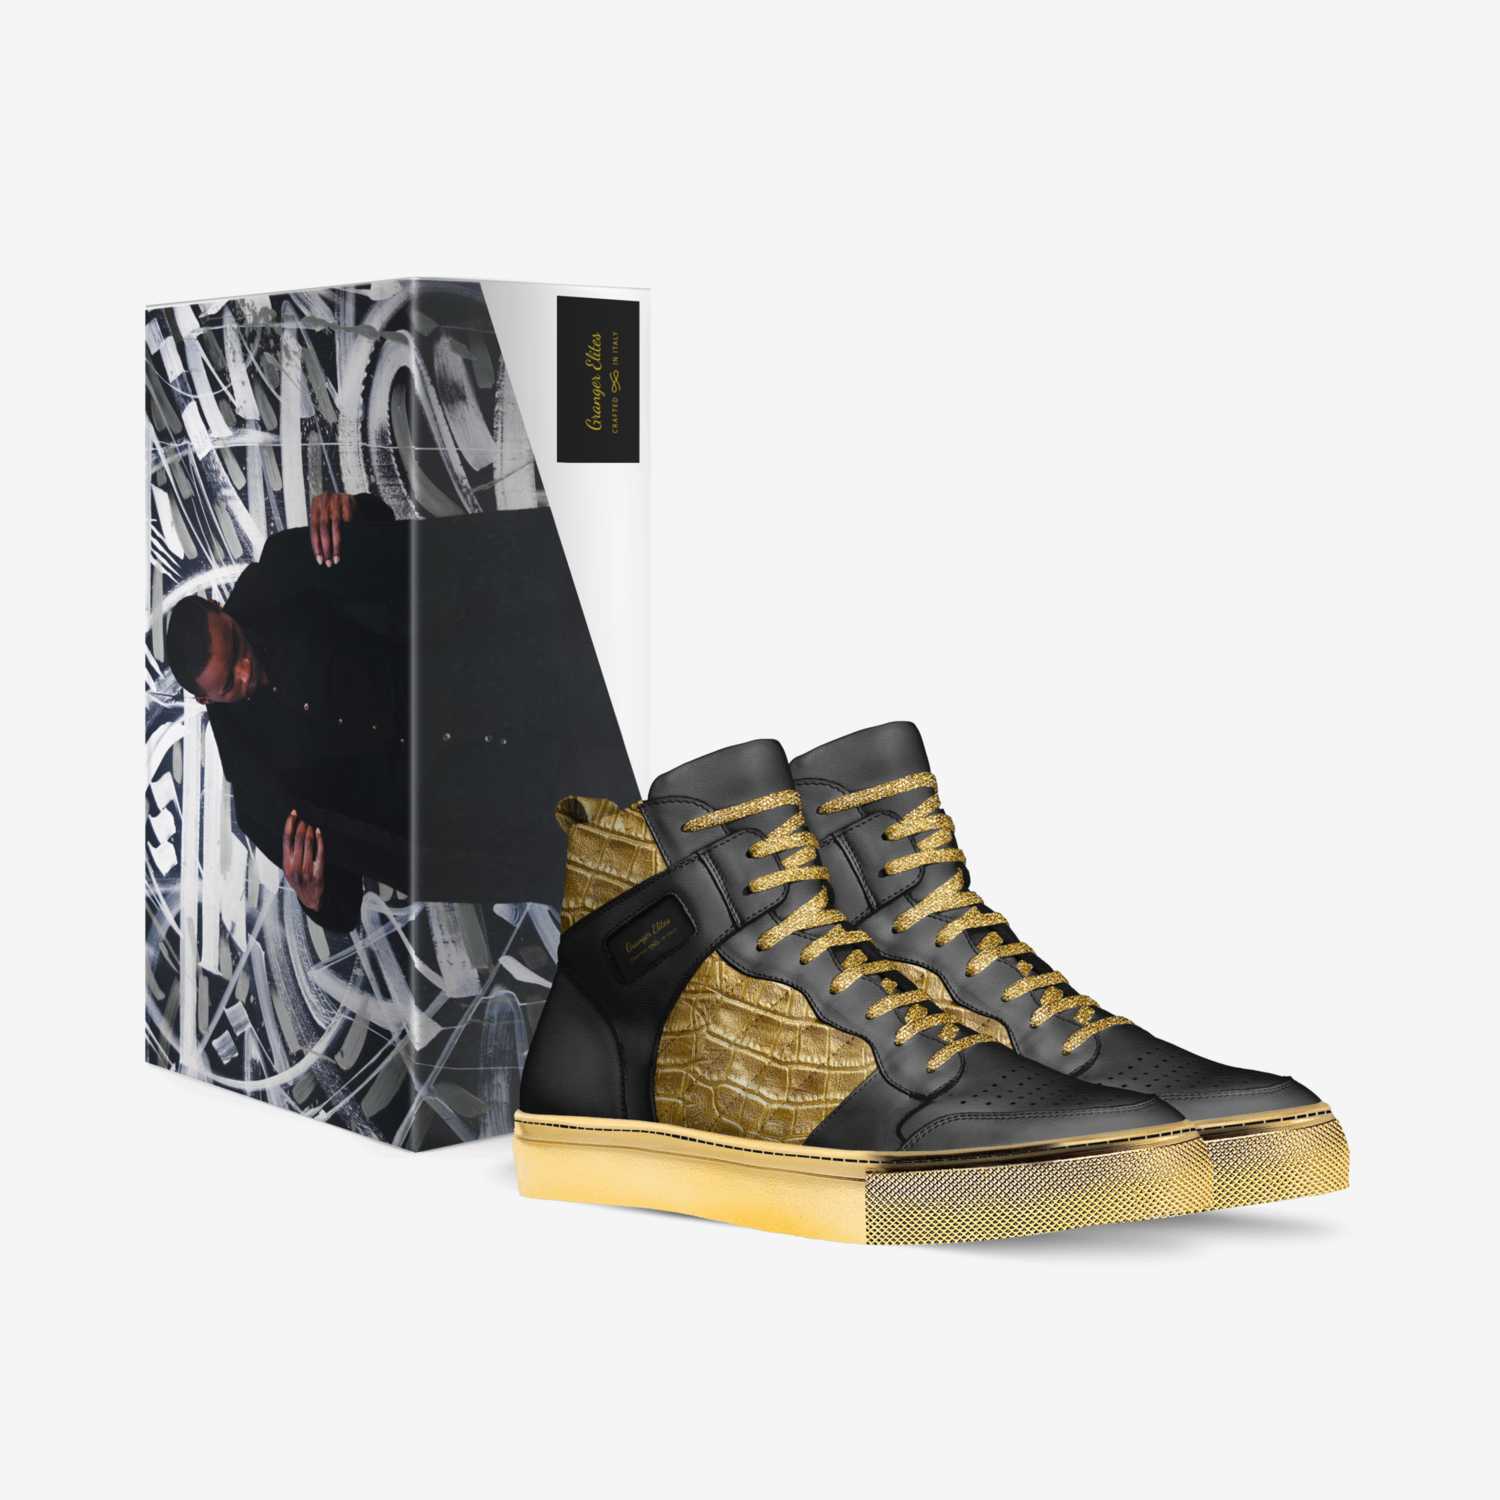 Granger Elites custom made in Italy shoes by Derrick Granger | Box view